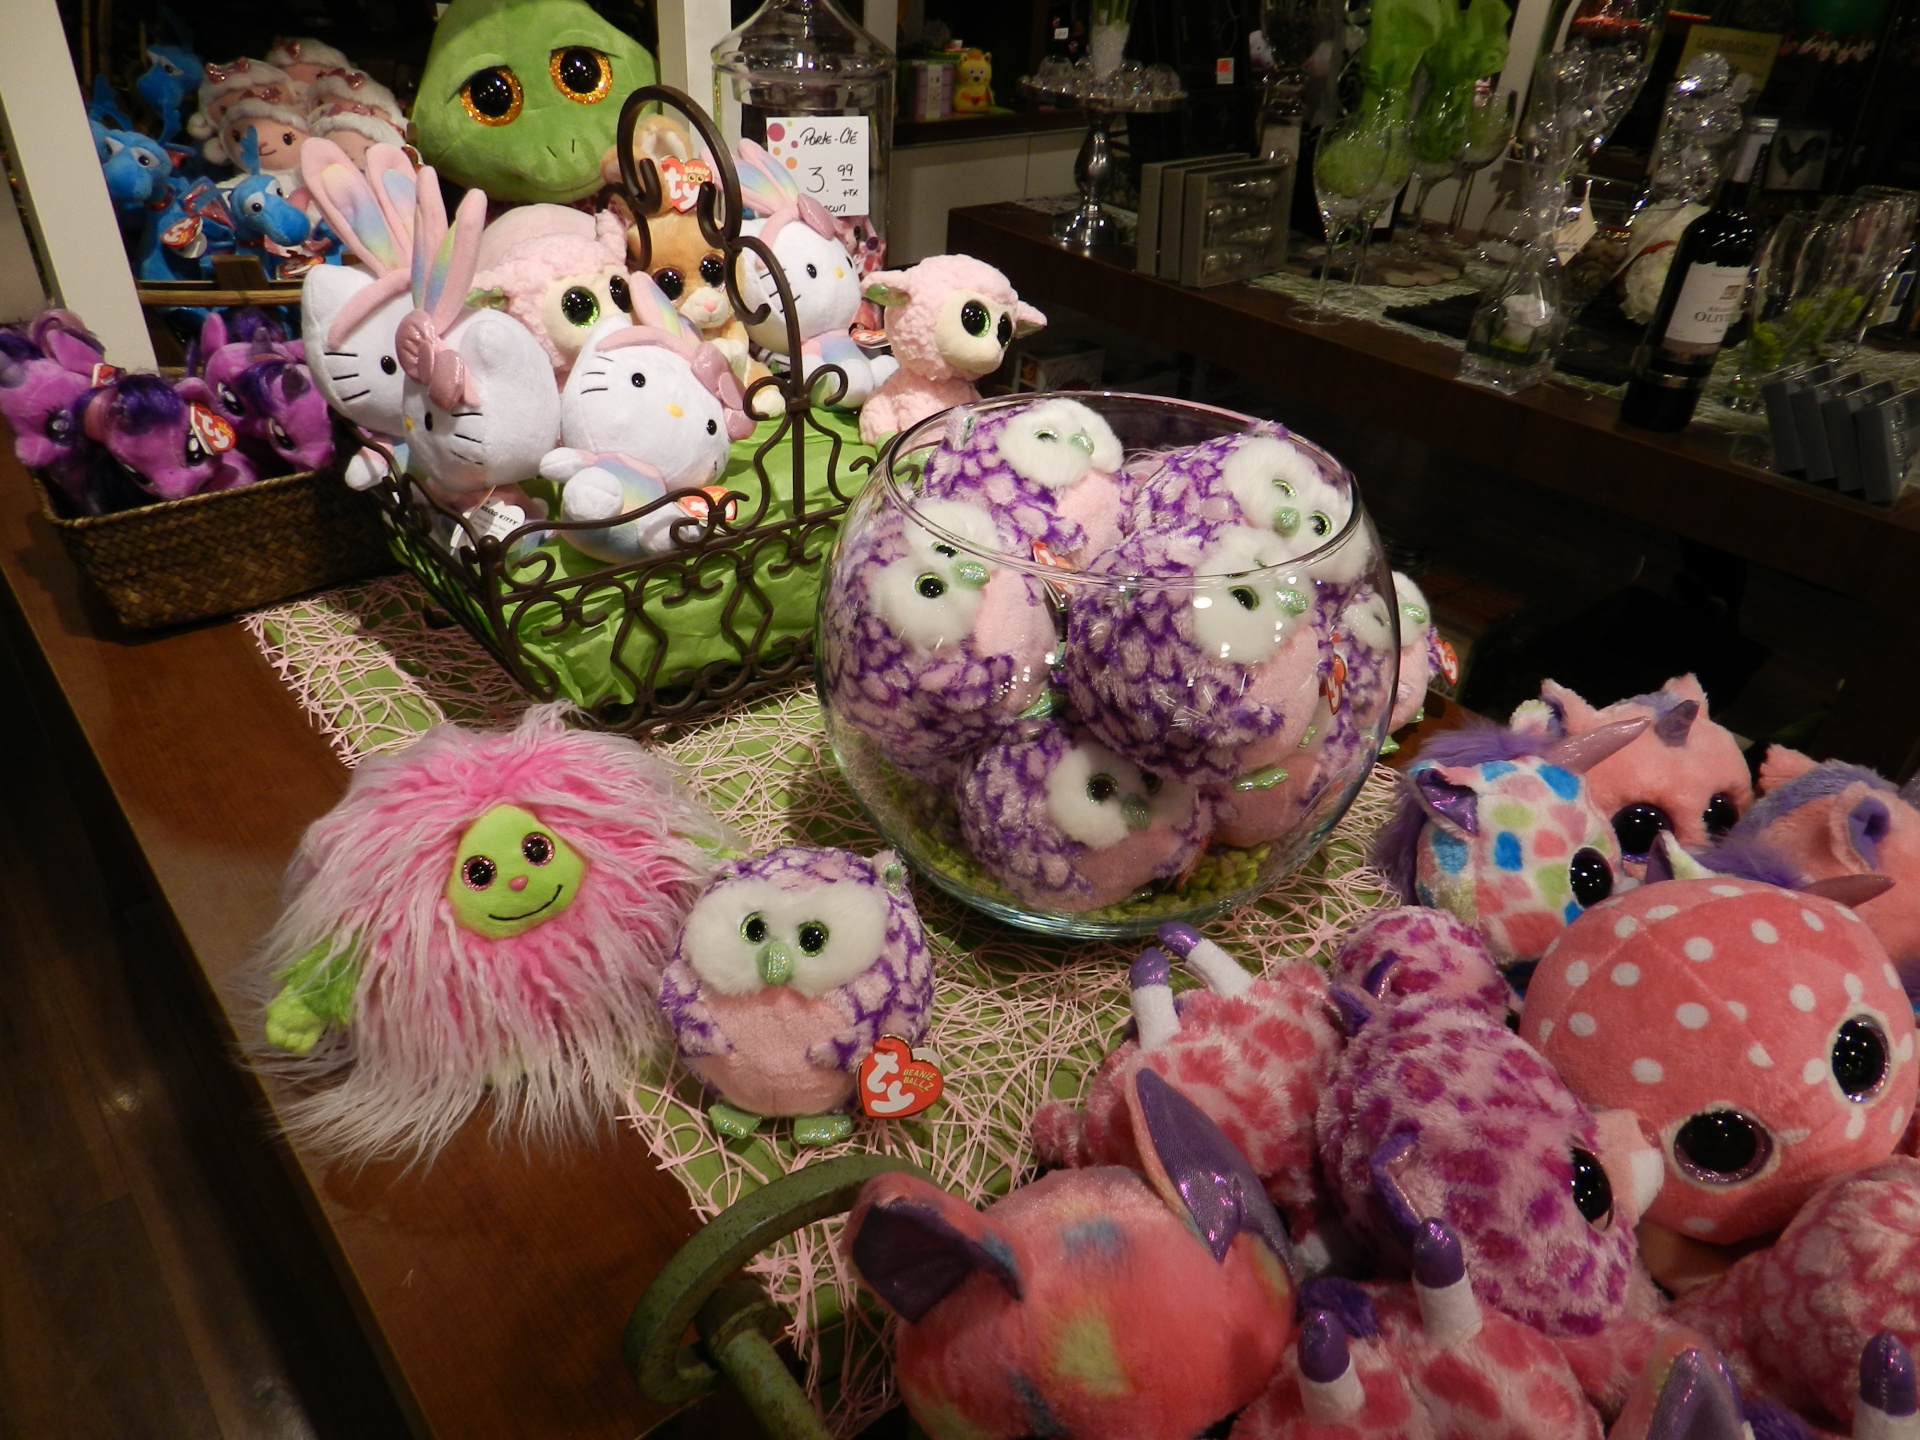 stuffed animals decorative items shop free photo